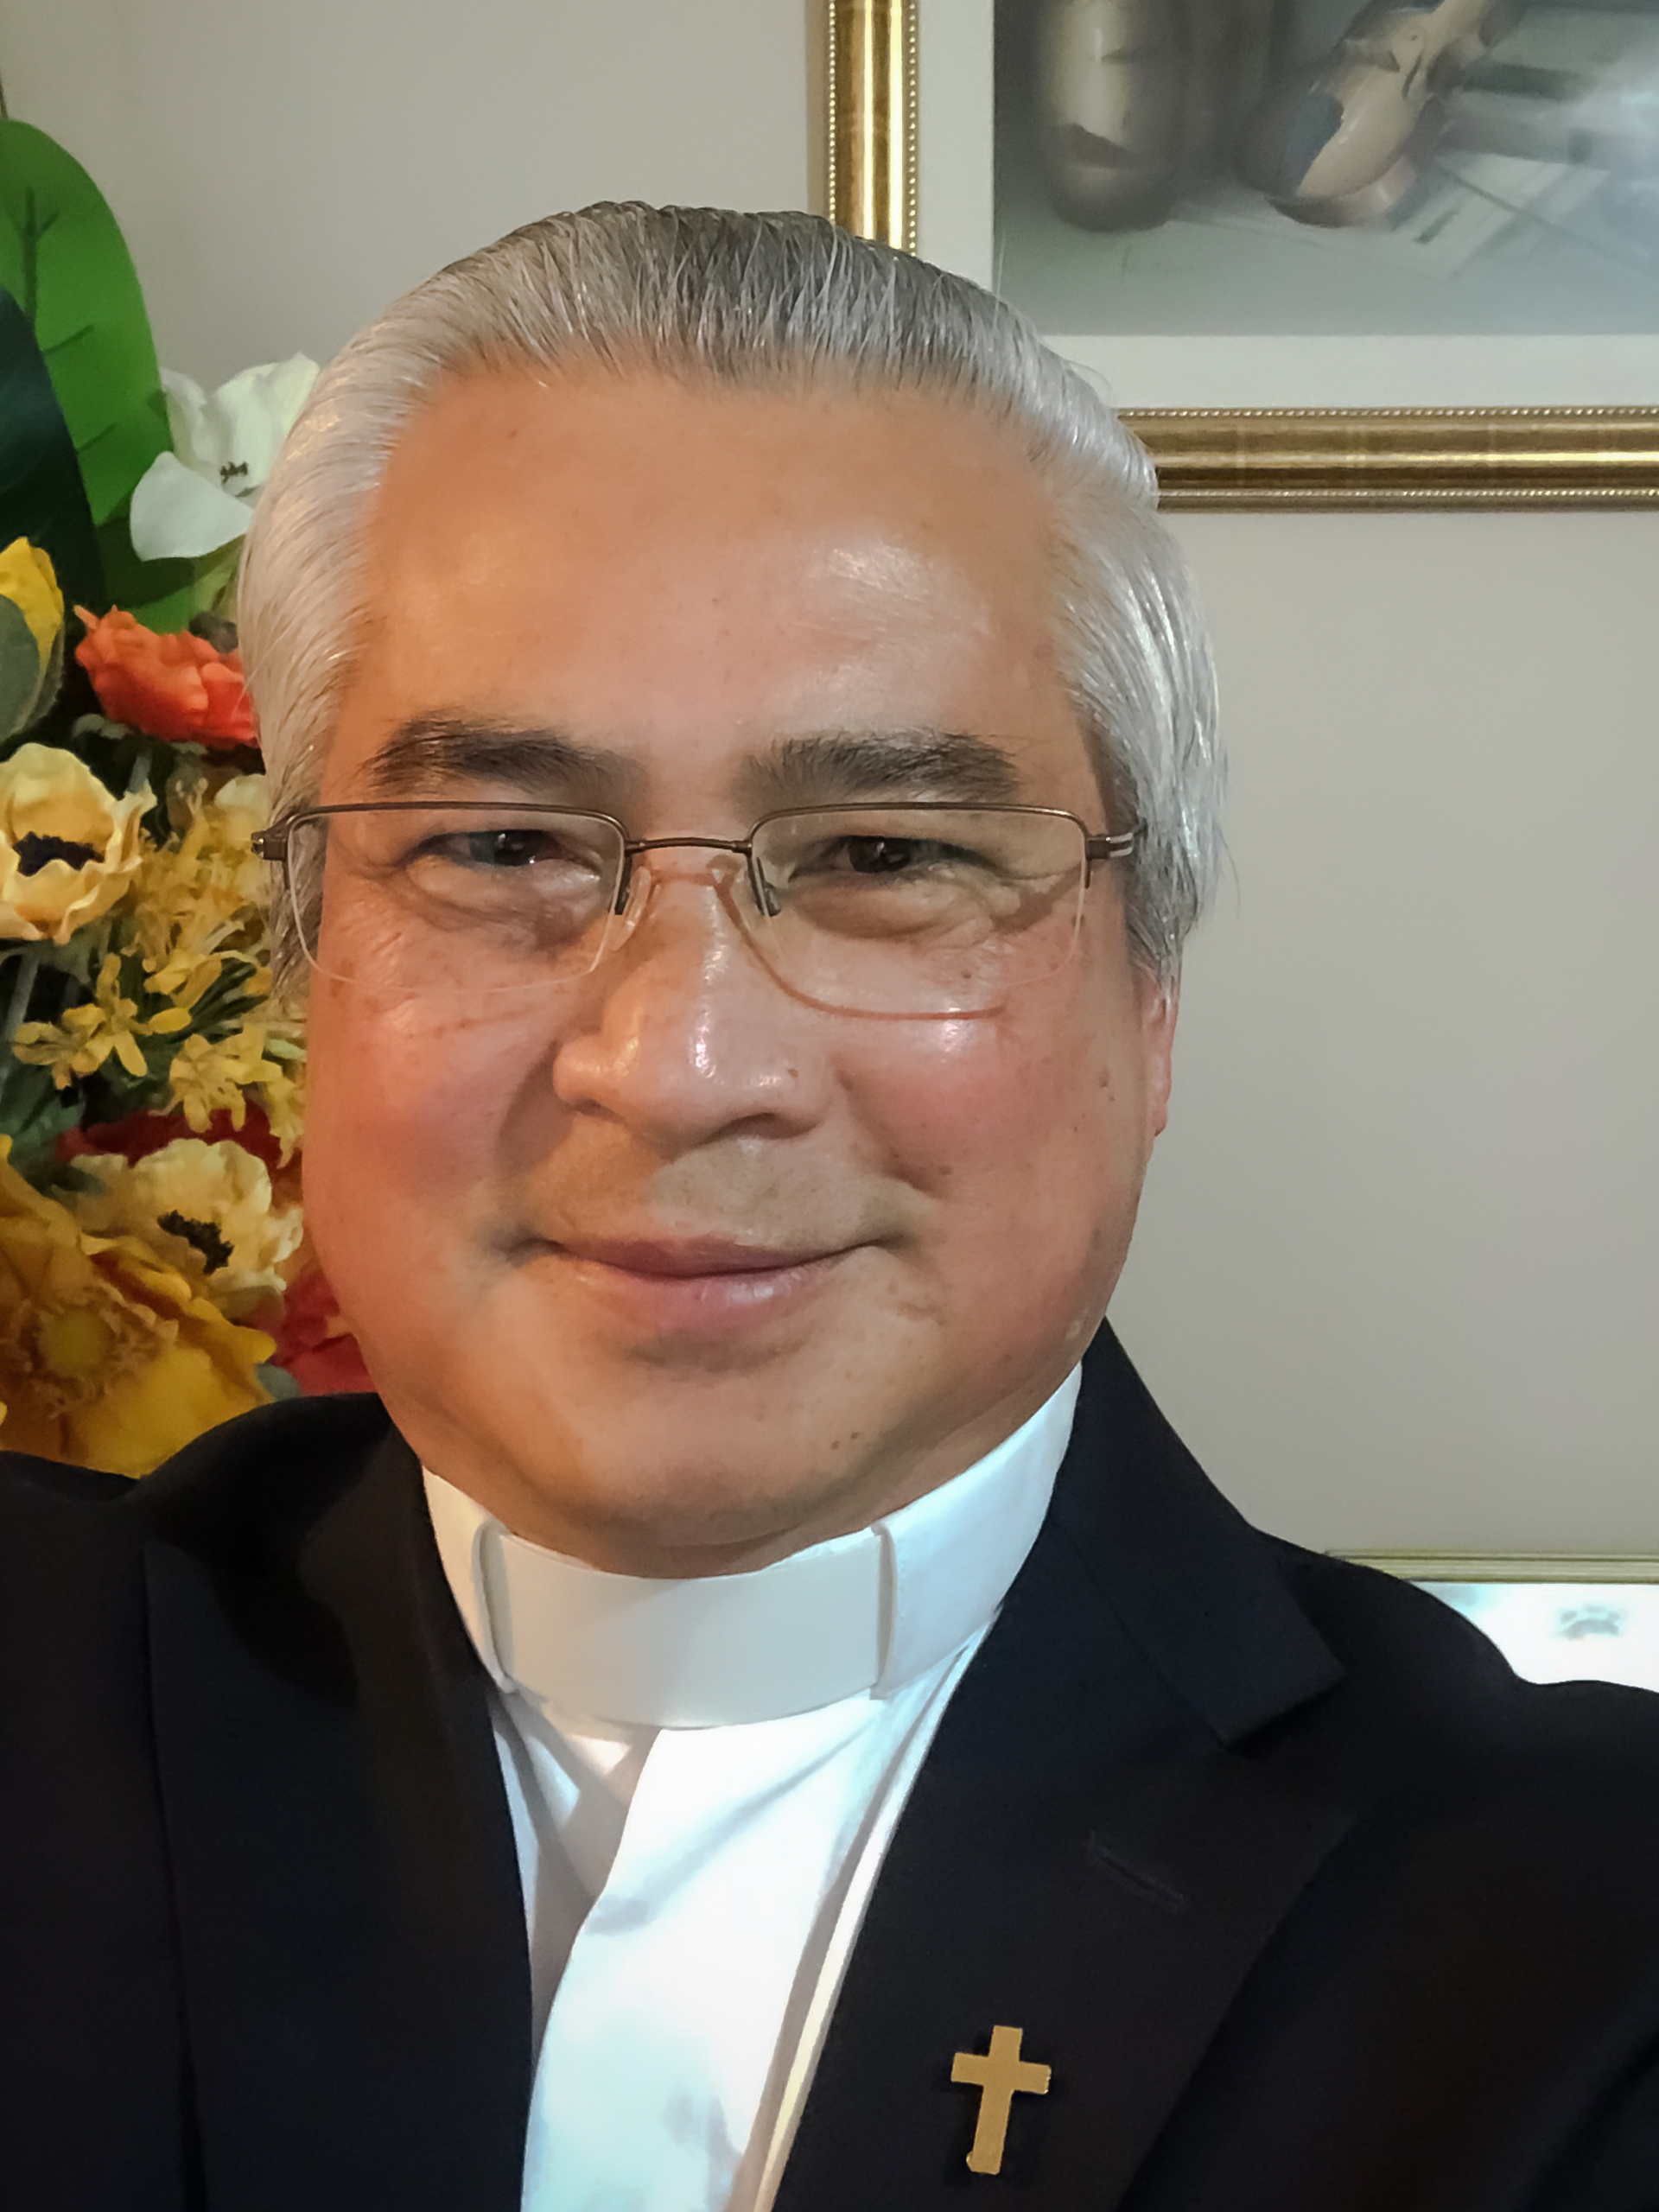 Father Peter Hung Tran